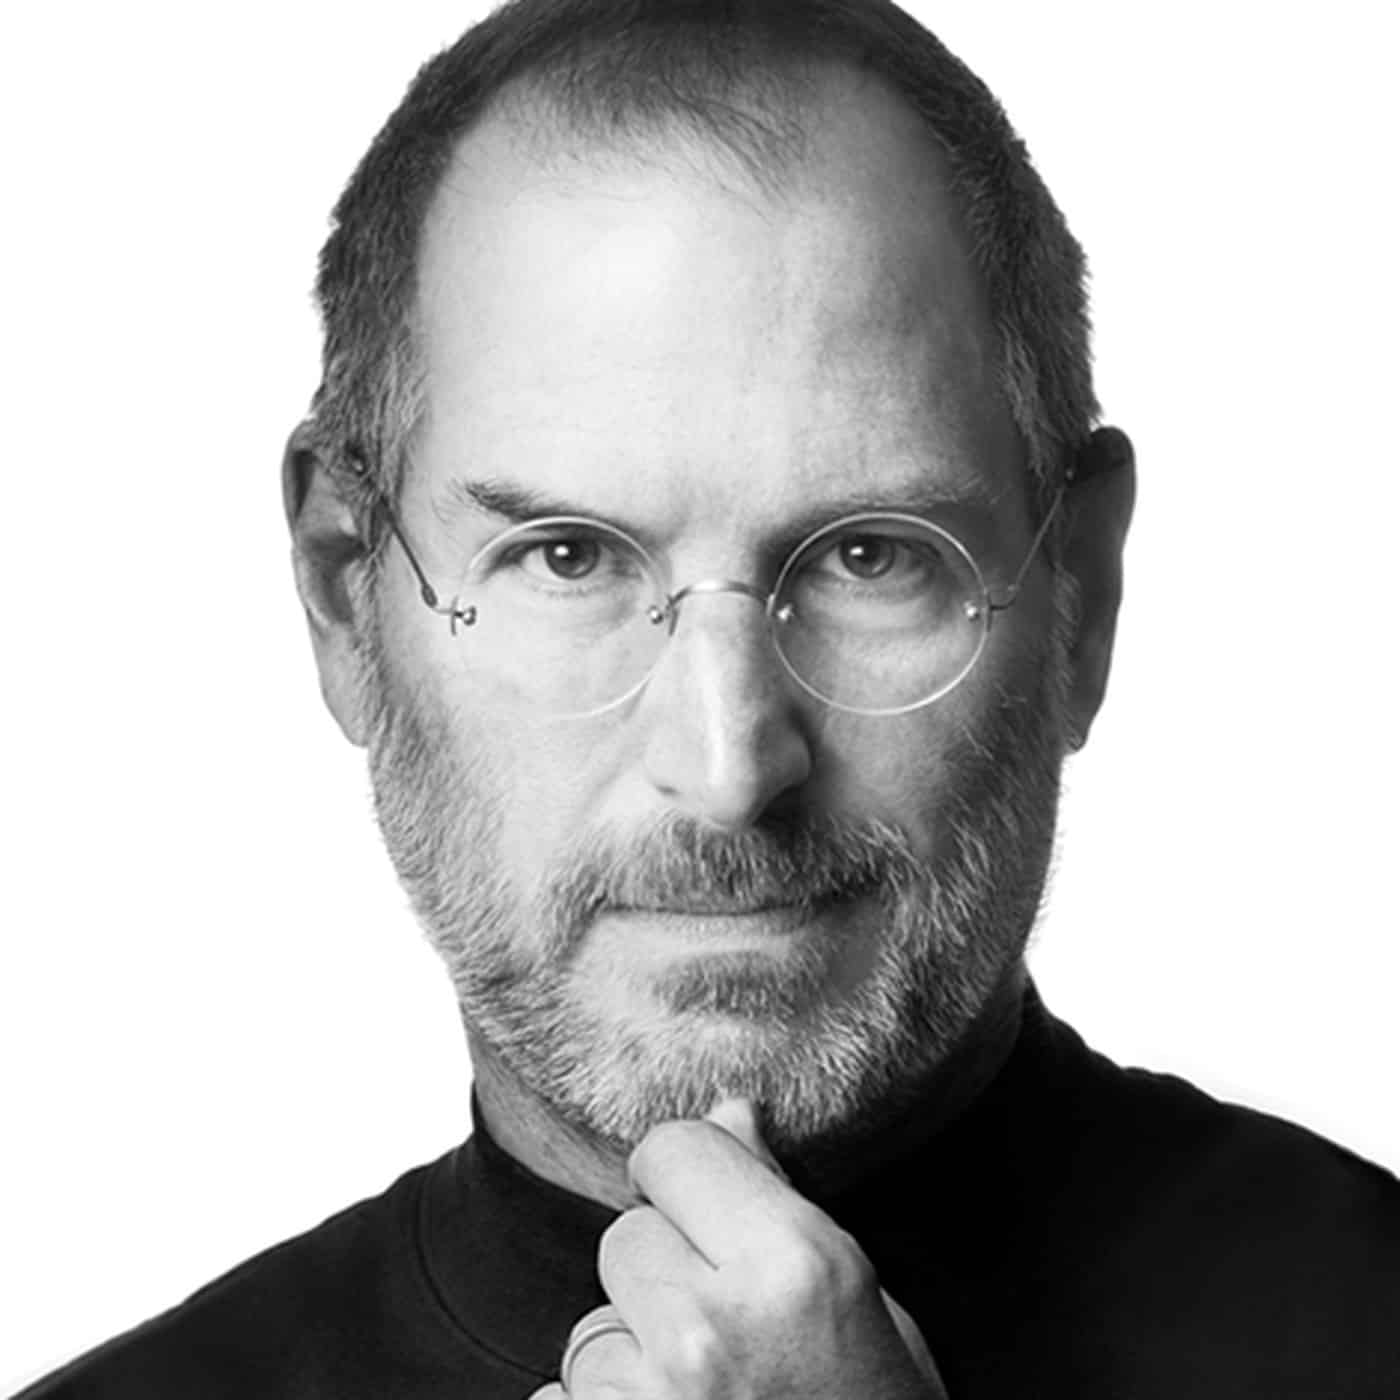 Steve Jobs made the black turtleneck iconic